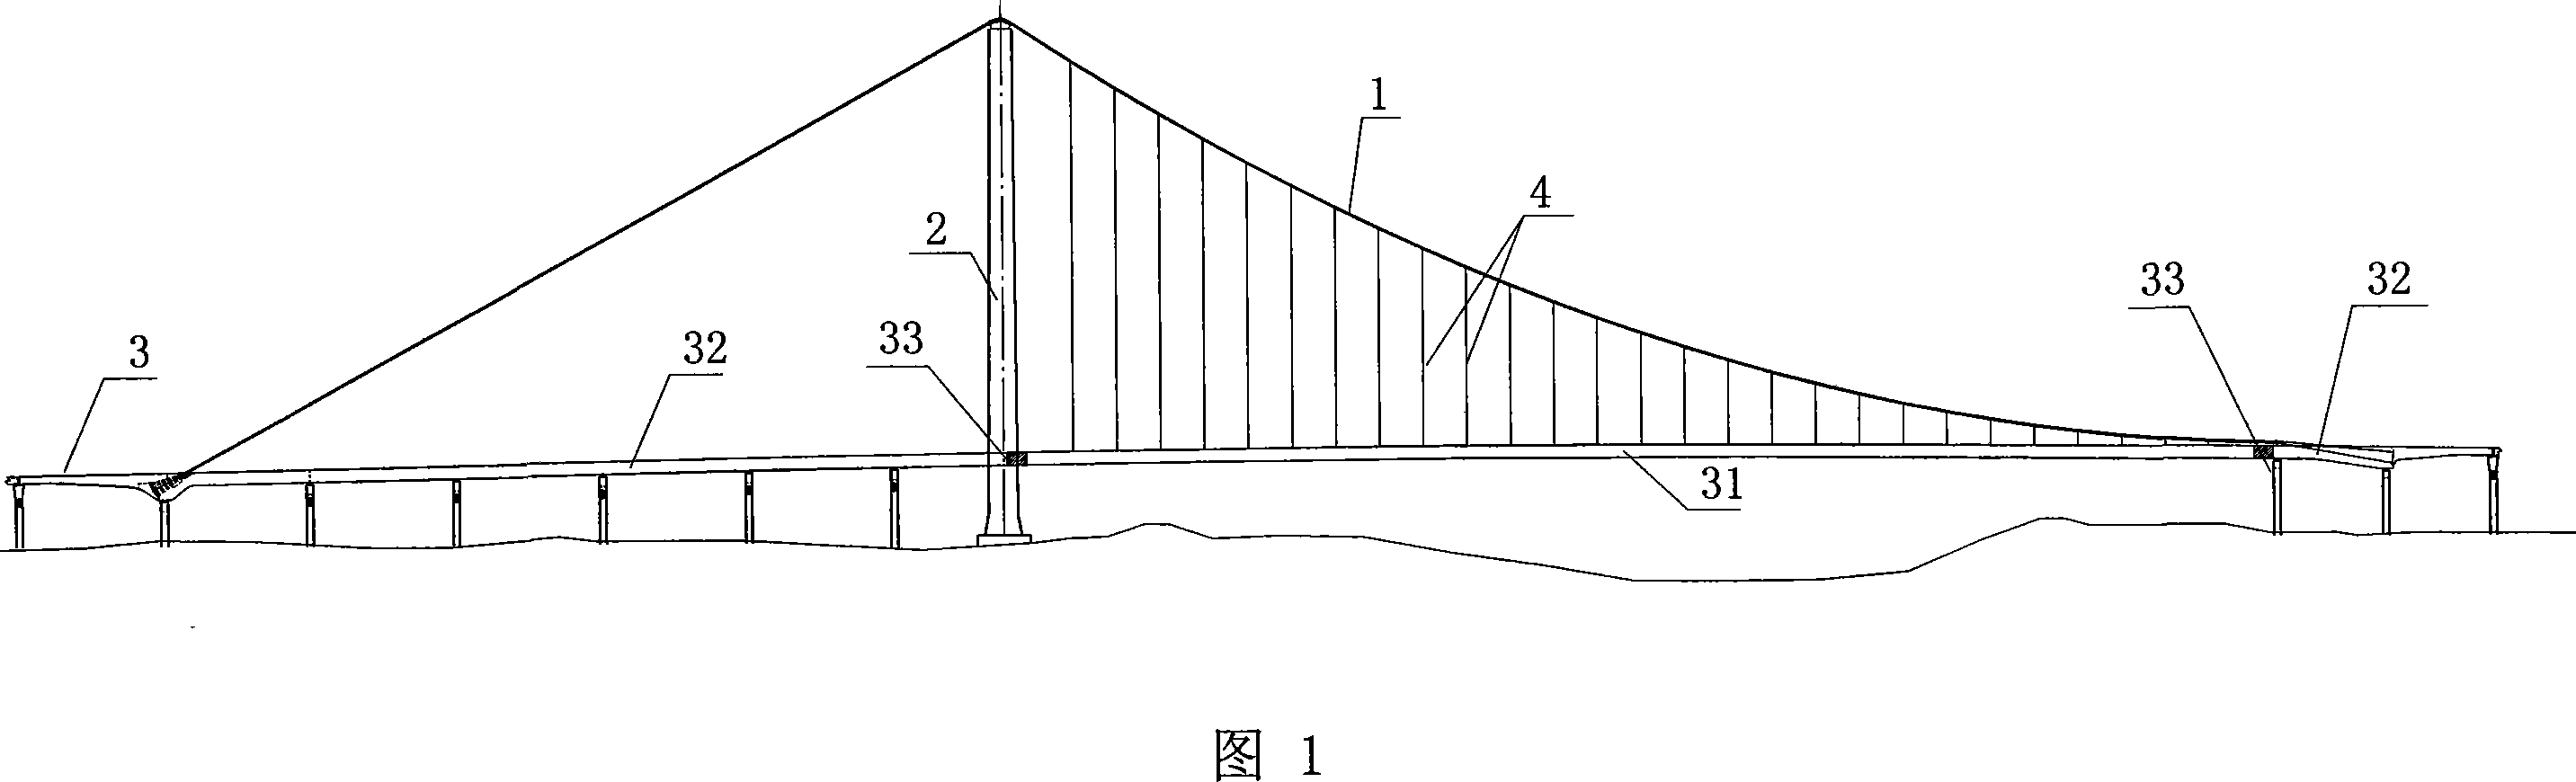 Main beam applied for single-tower self-anchored suspension bridge